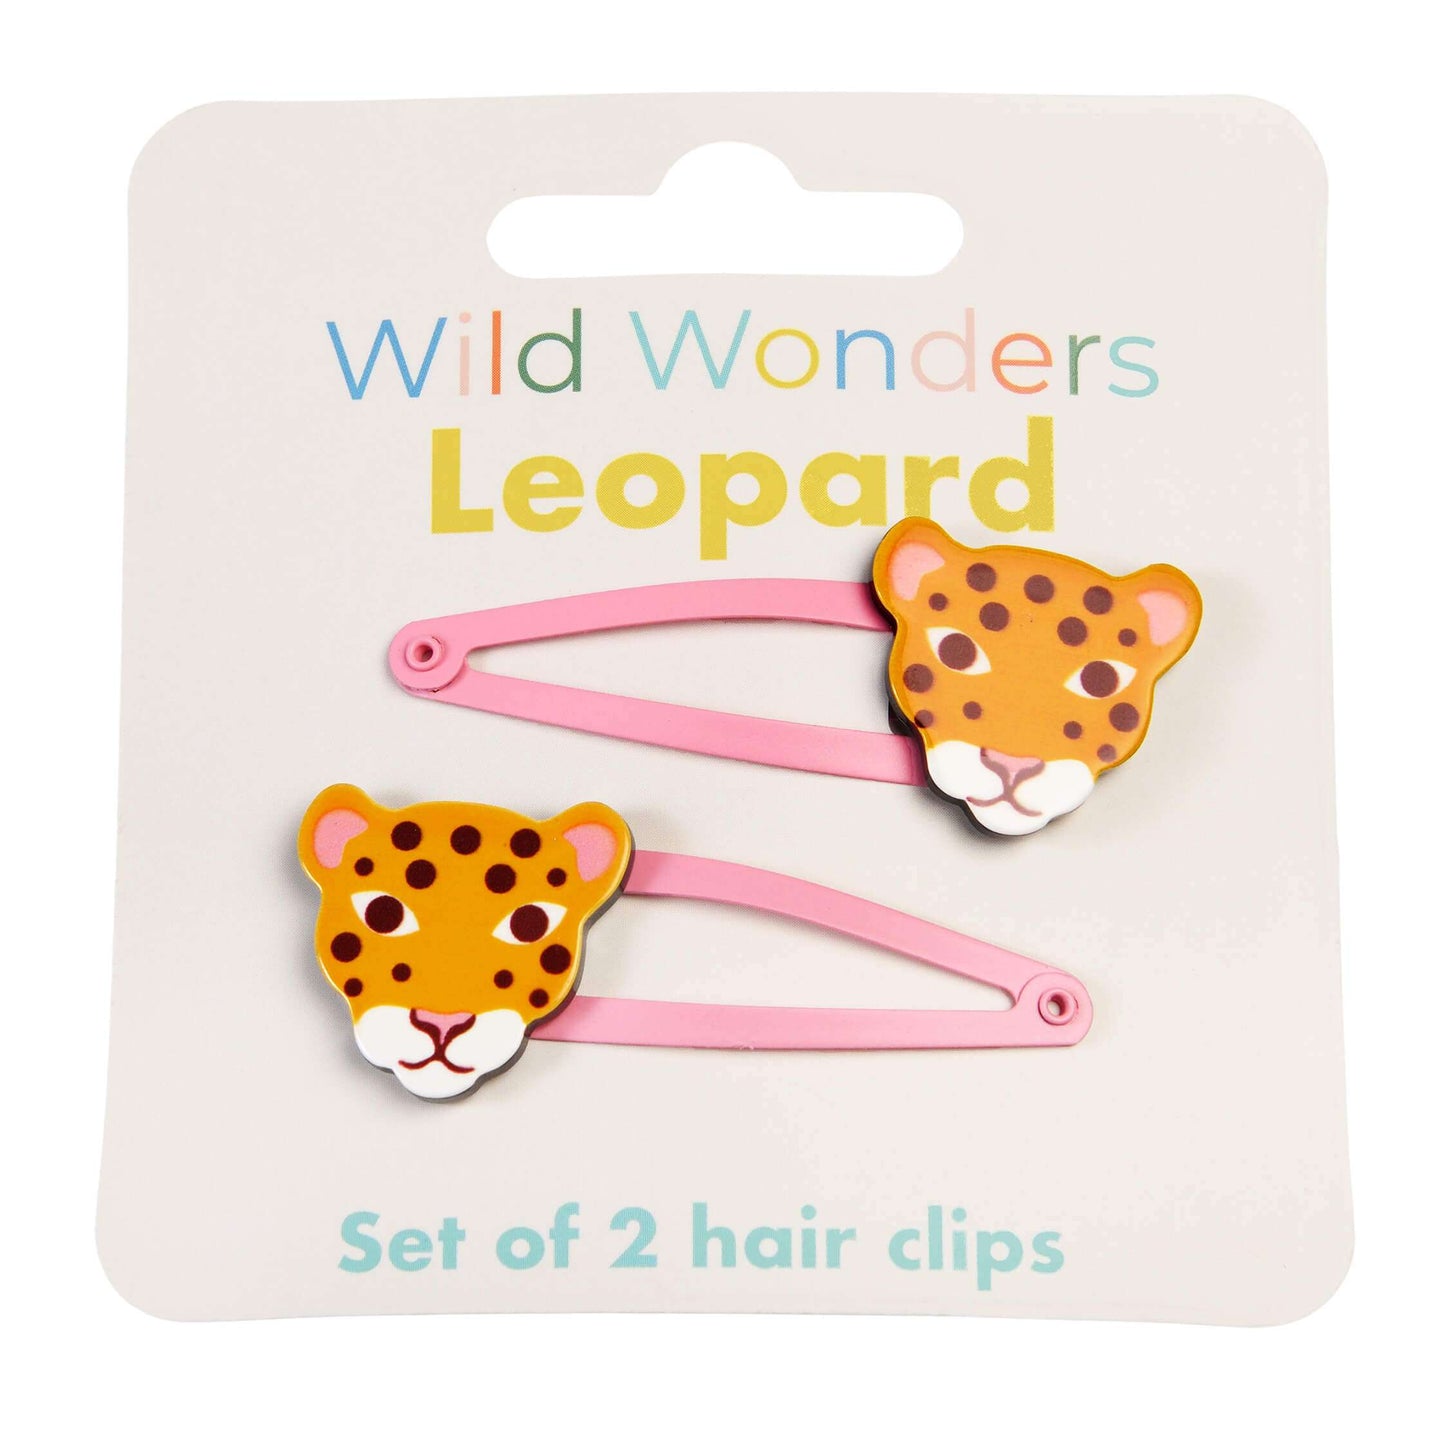 Wild Wonders Leopard Hair Clips